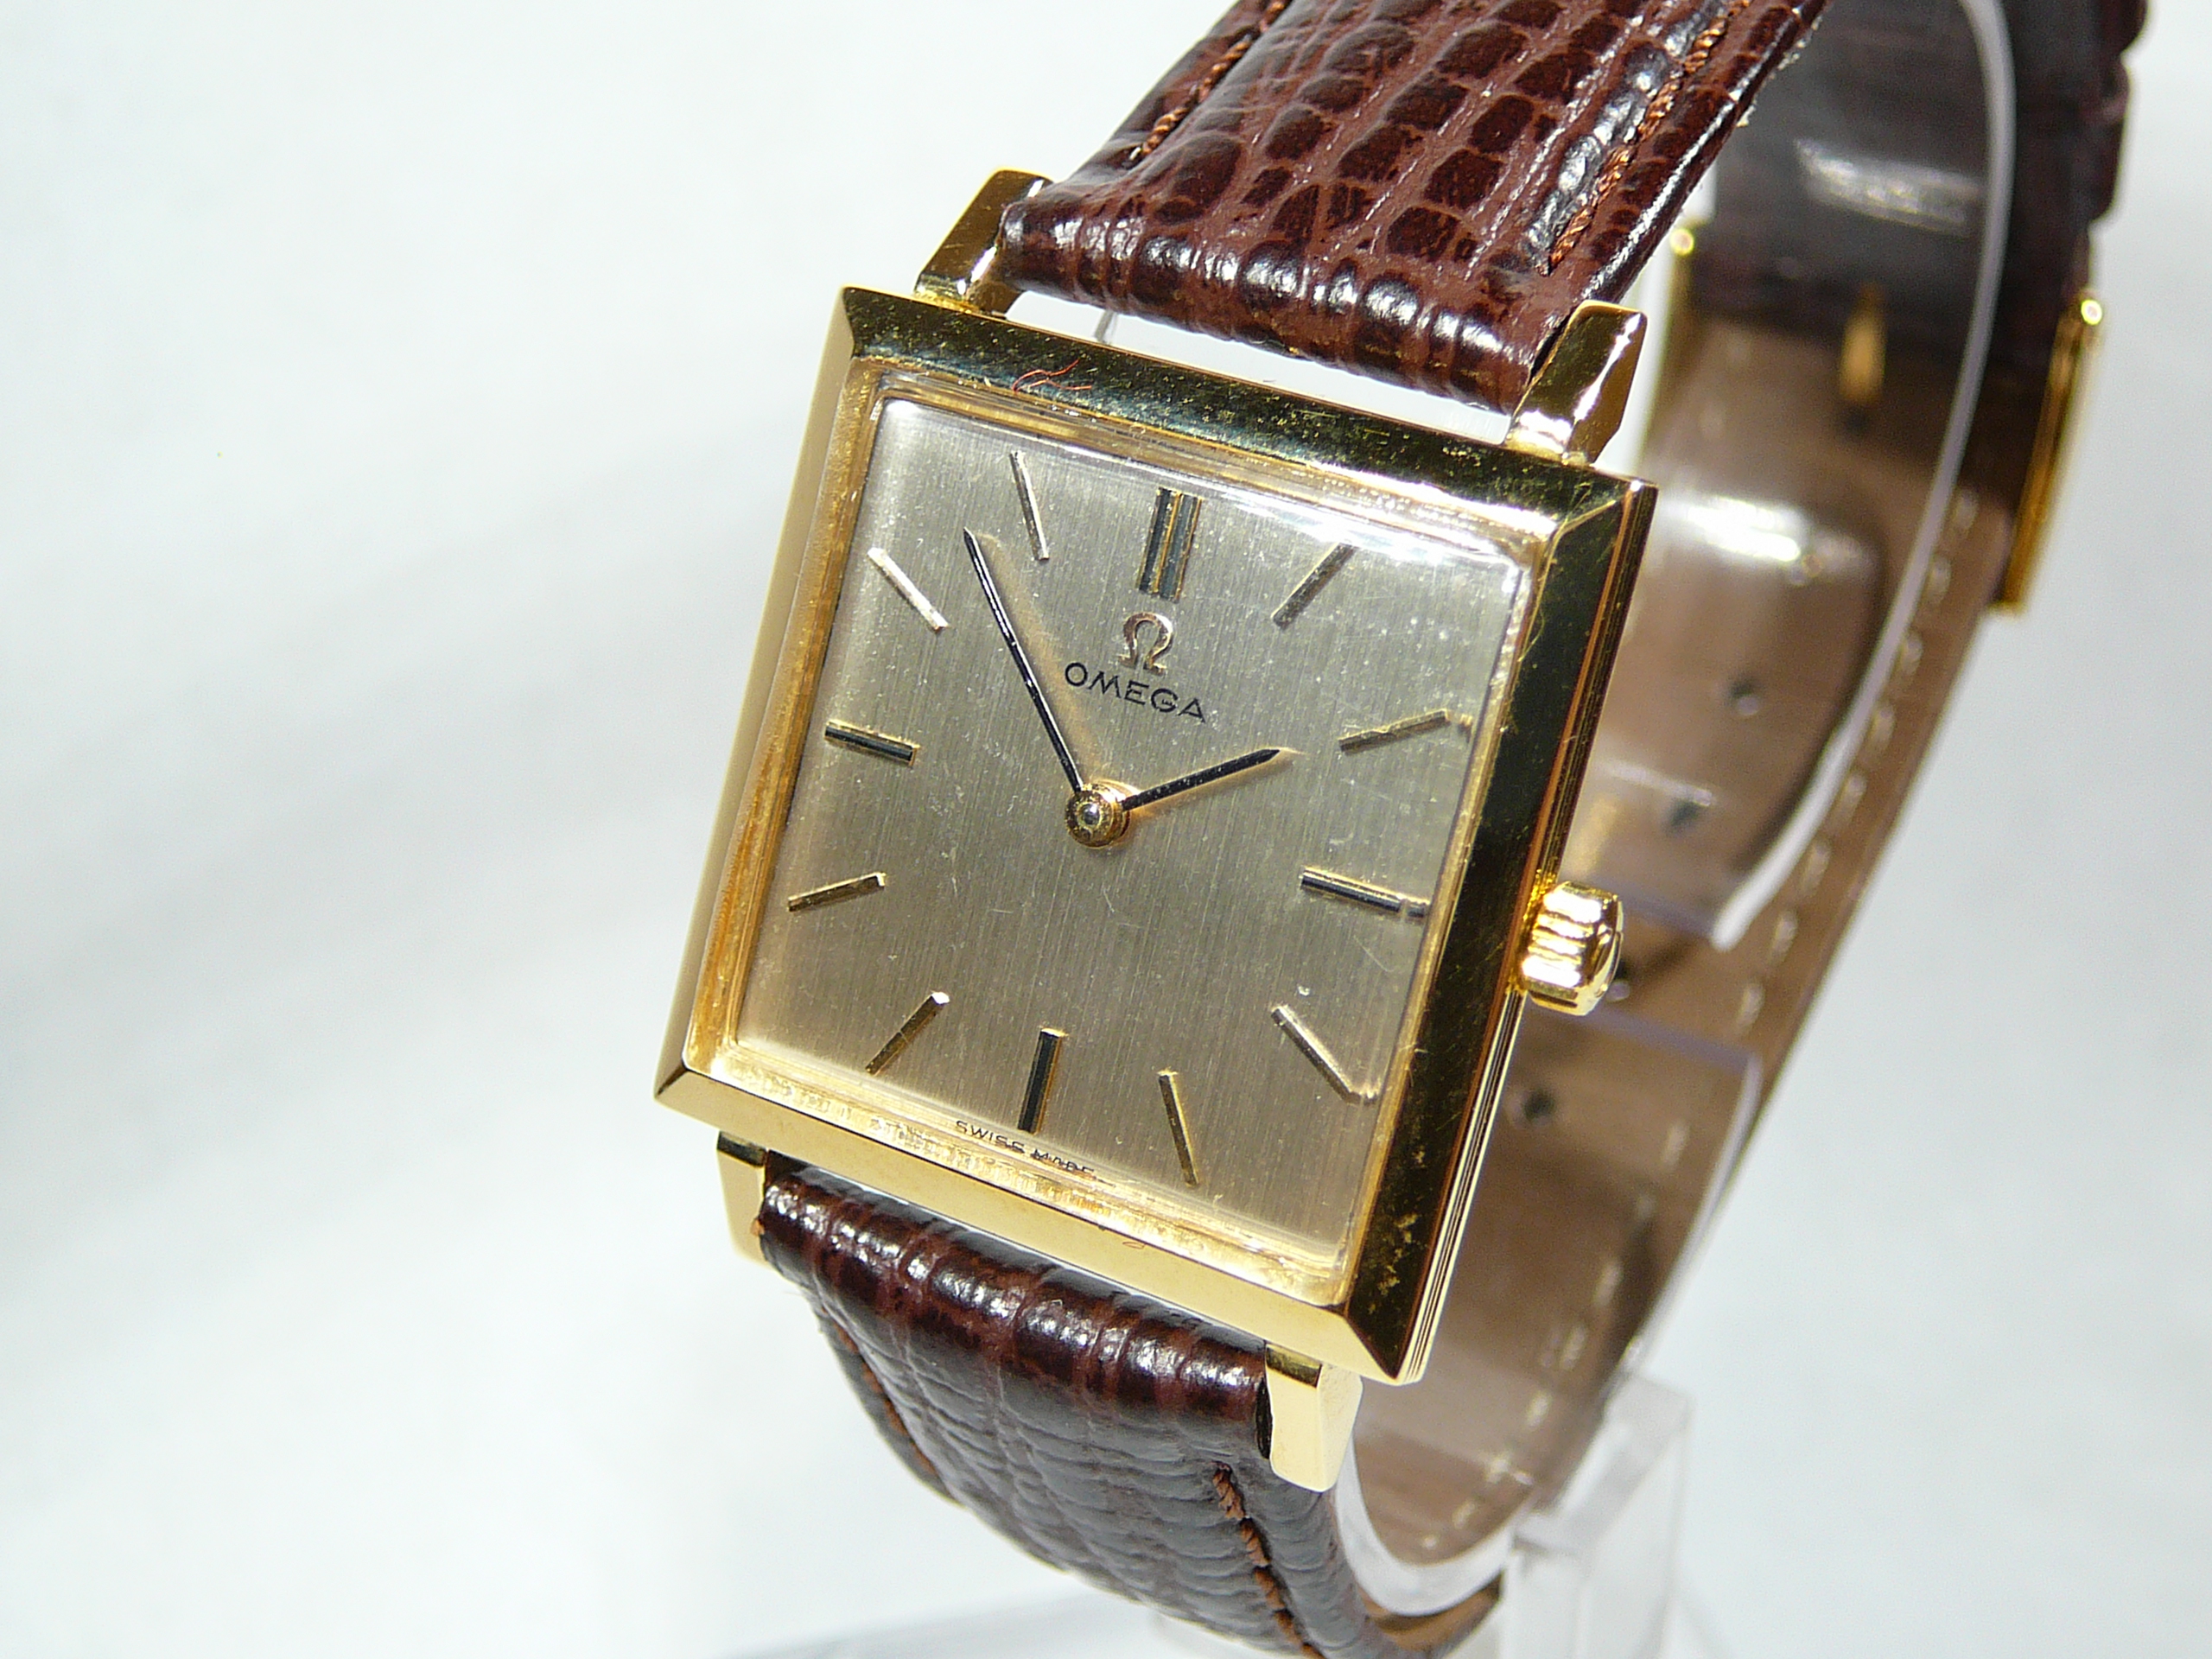 Ladies Vintage Gold Omega Wrist Watch - Image 2 of 3